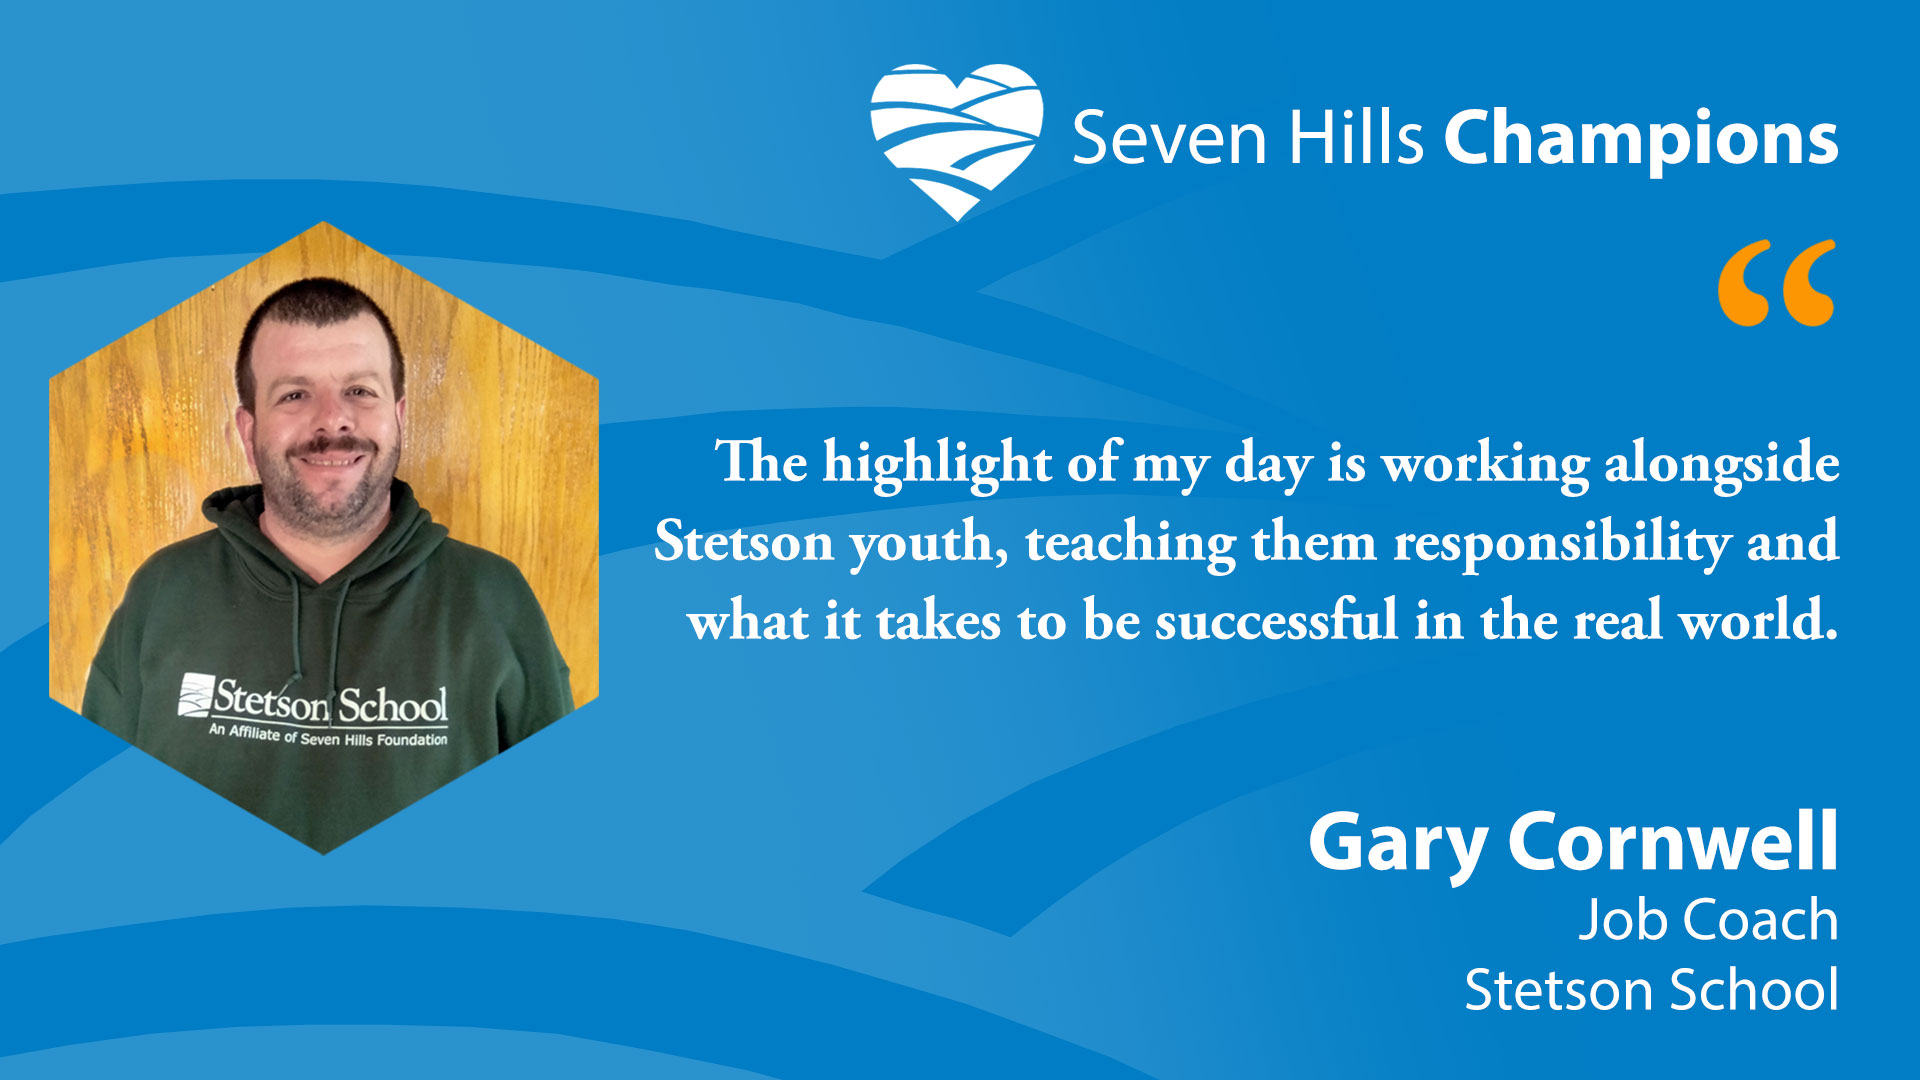 Introducing this Week's Seven Hills Champion, Gary Cornwell, Job Coach, Stetson School